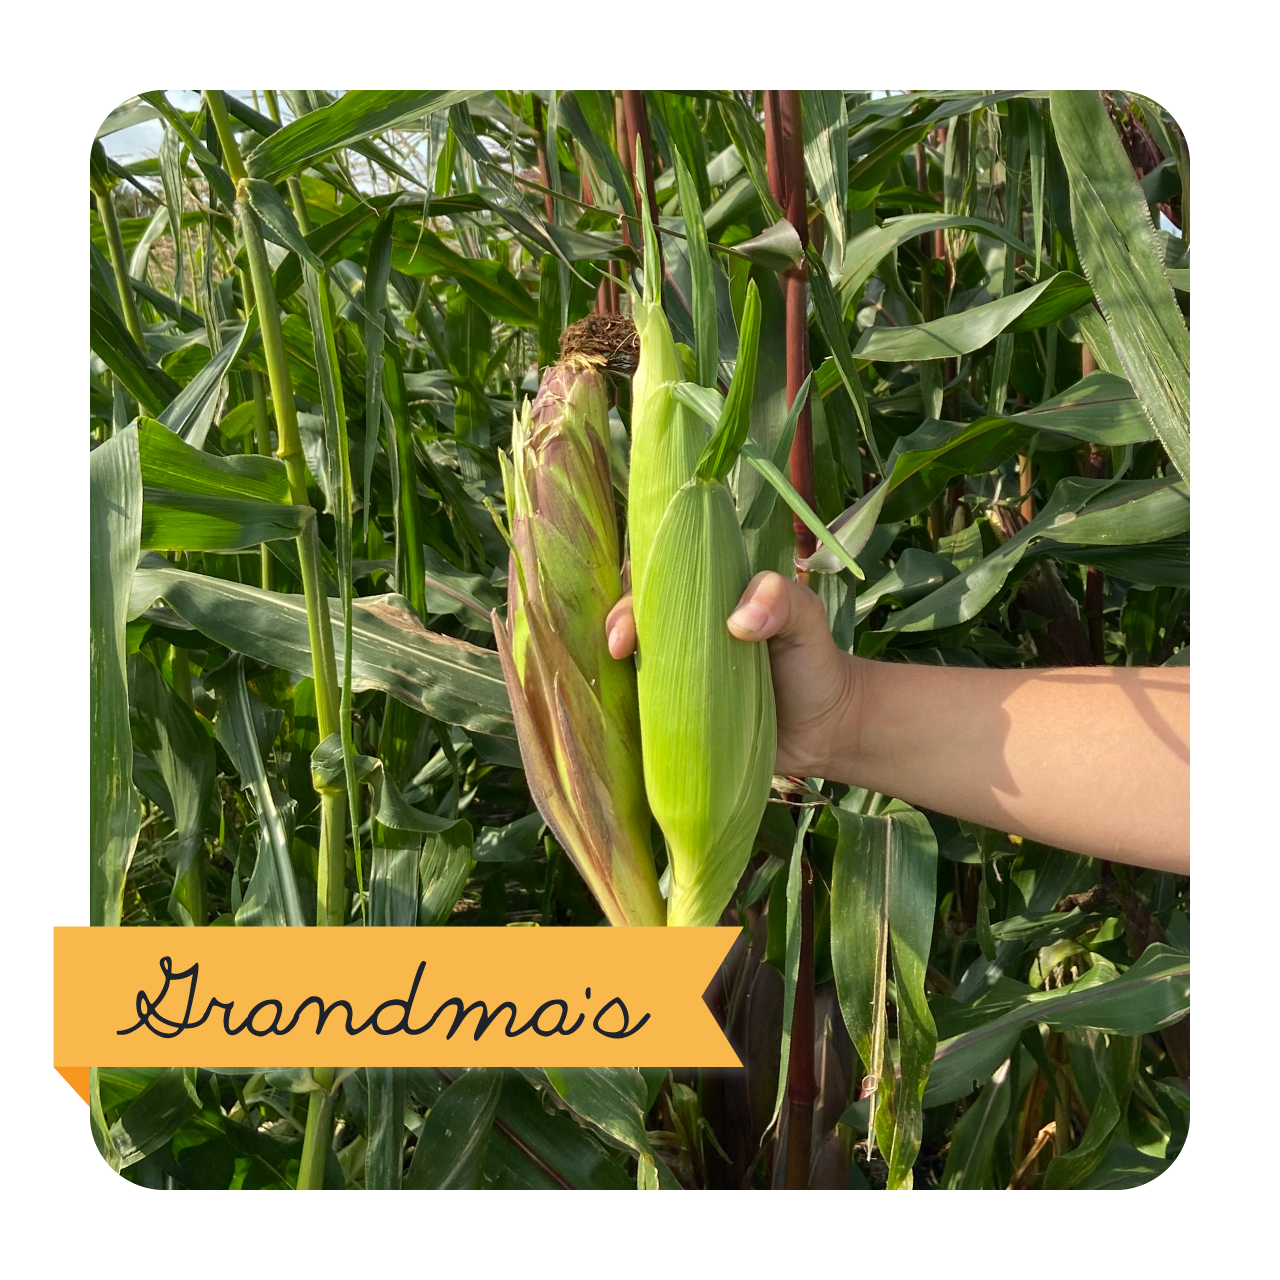 grandma's corn